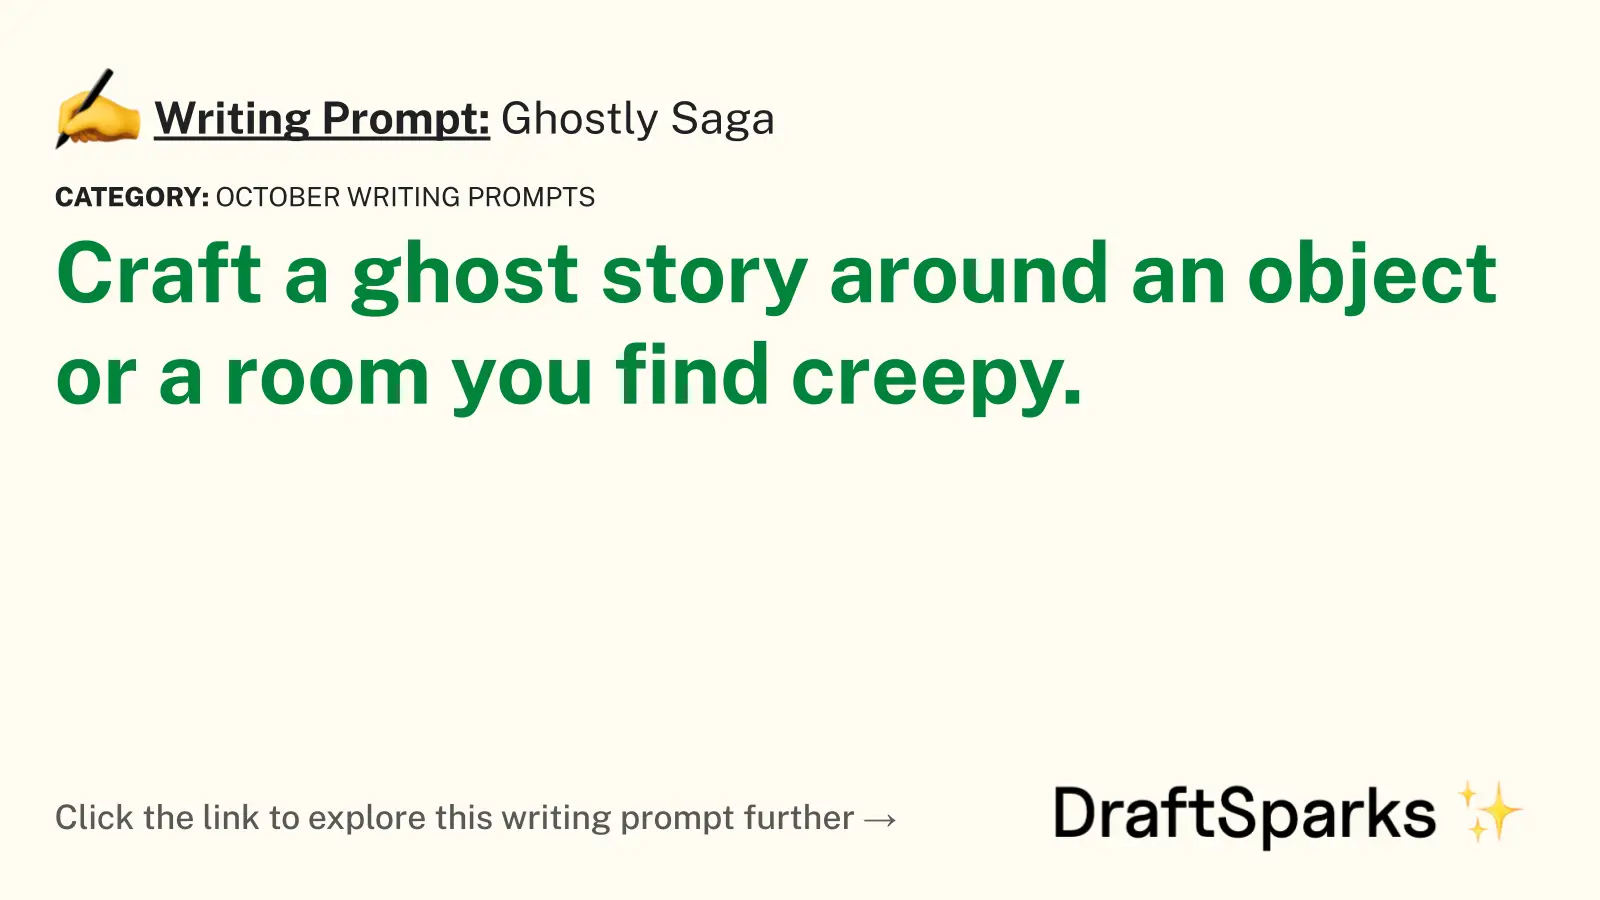 Ghostly Saga